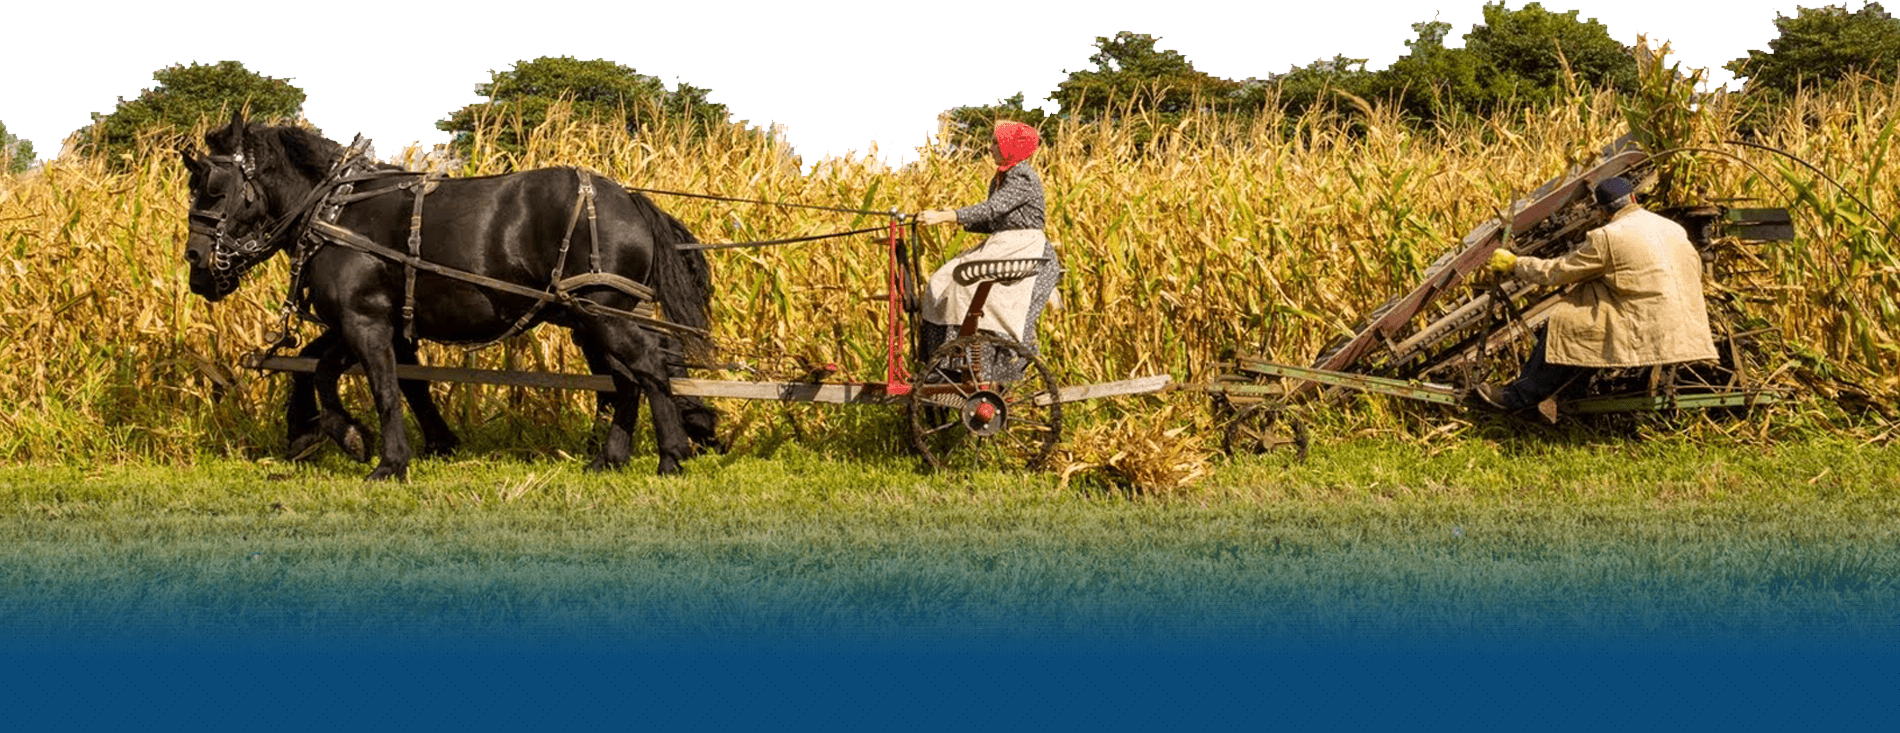 farming activities in india